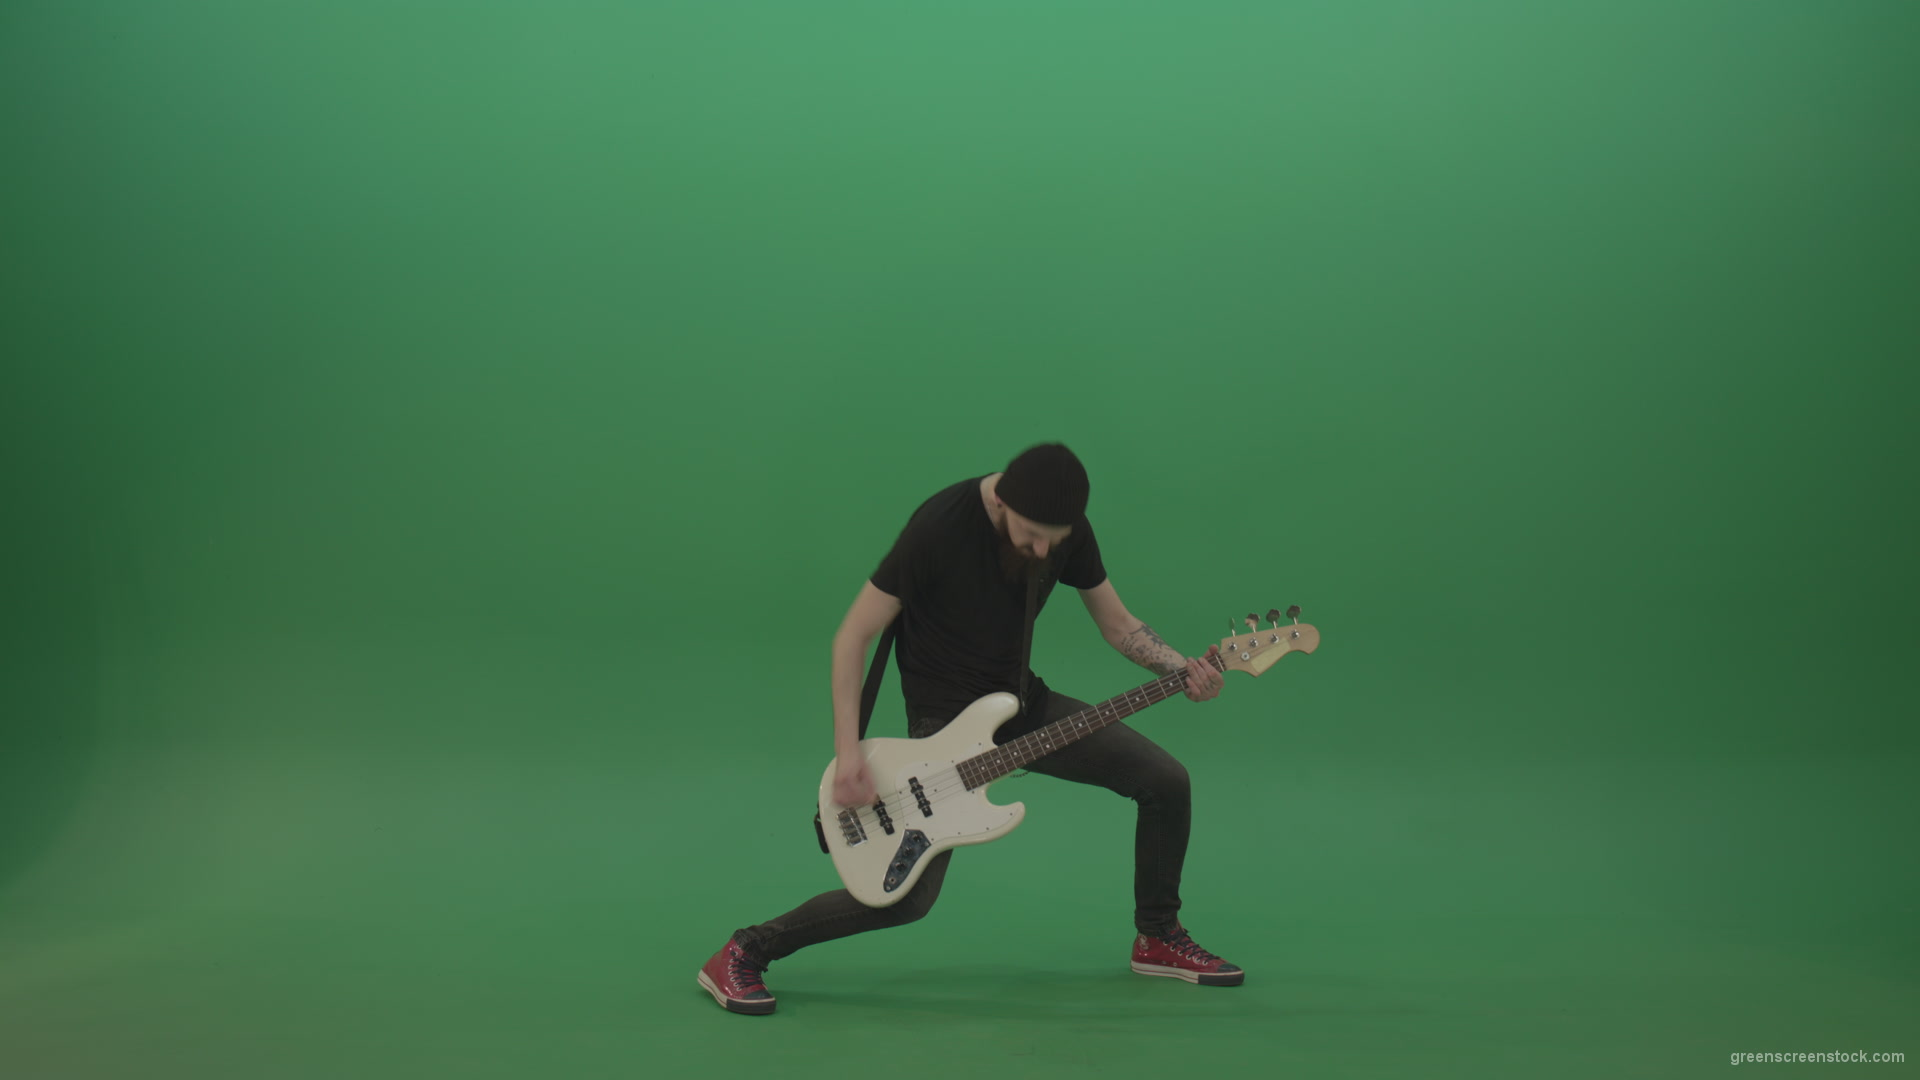 Man-enjoy-to-play-hard-rock-bass-guitar-isolated-on-green-screen-4k-footage_007 Green Screen Stock